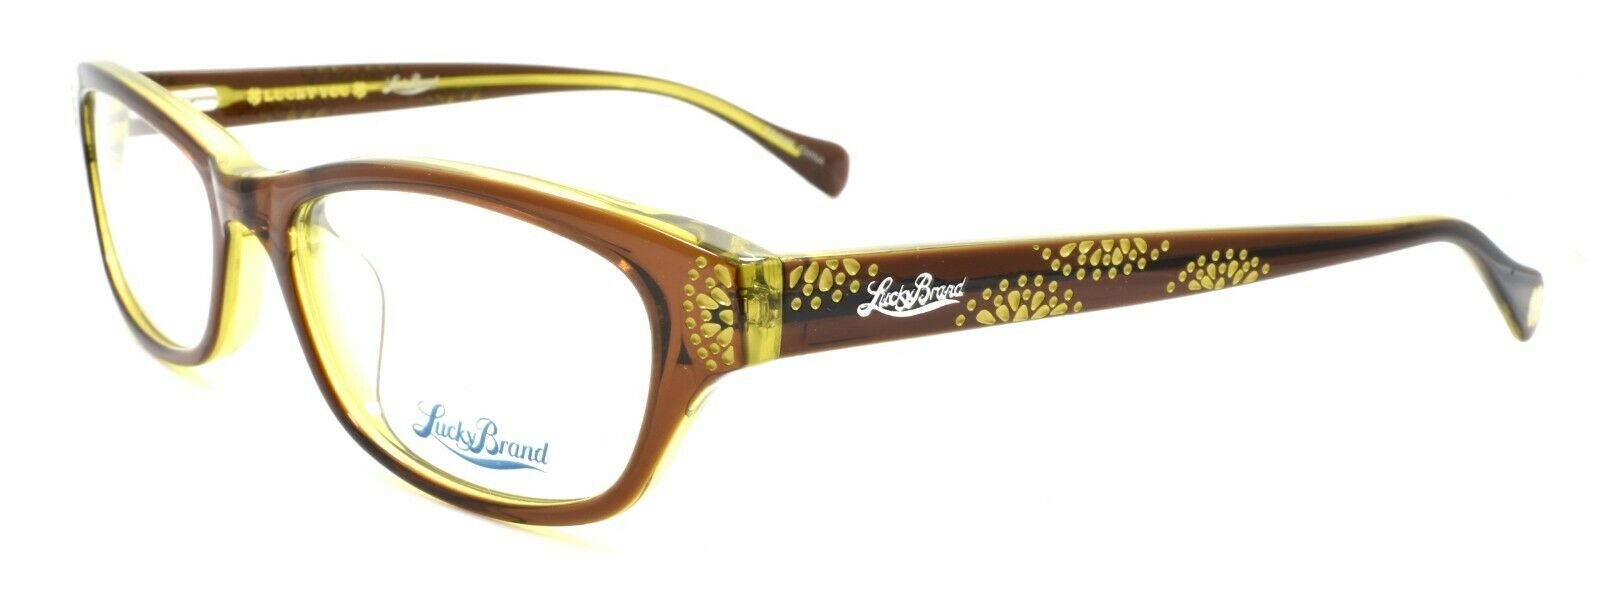 1-LUCKY BRAND Swirl Women's Eyeglasses Frames 53-17-135 Brown + CASE-751286267884-IKSpecs